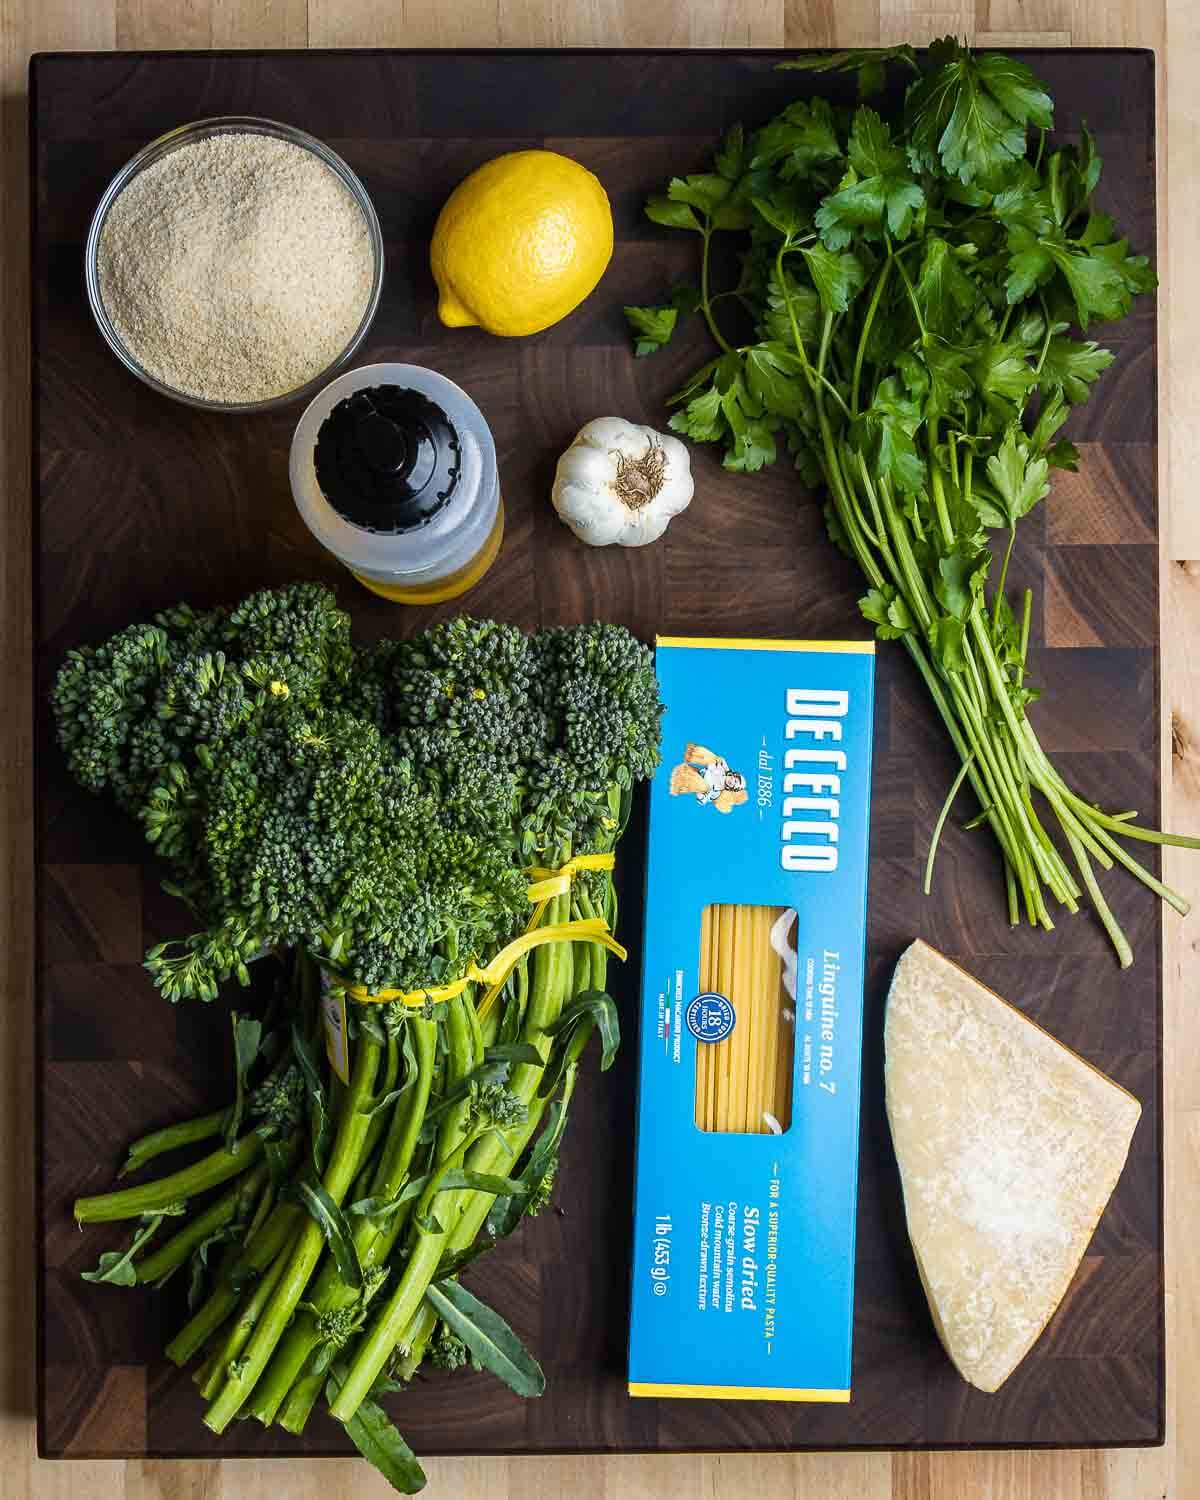 Ingredients shown: breadcrumbs, lemon, olive oil, garlic, parsley, broccolini, linguine, and Parmigiano Reggiano.